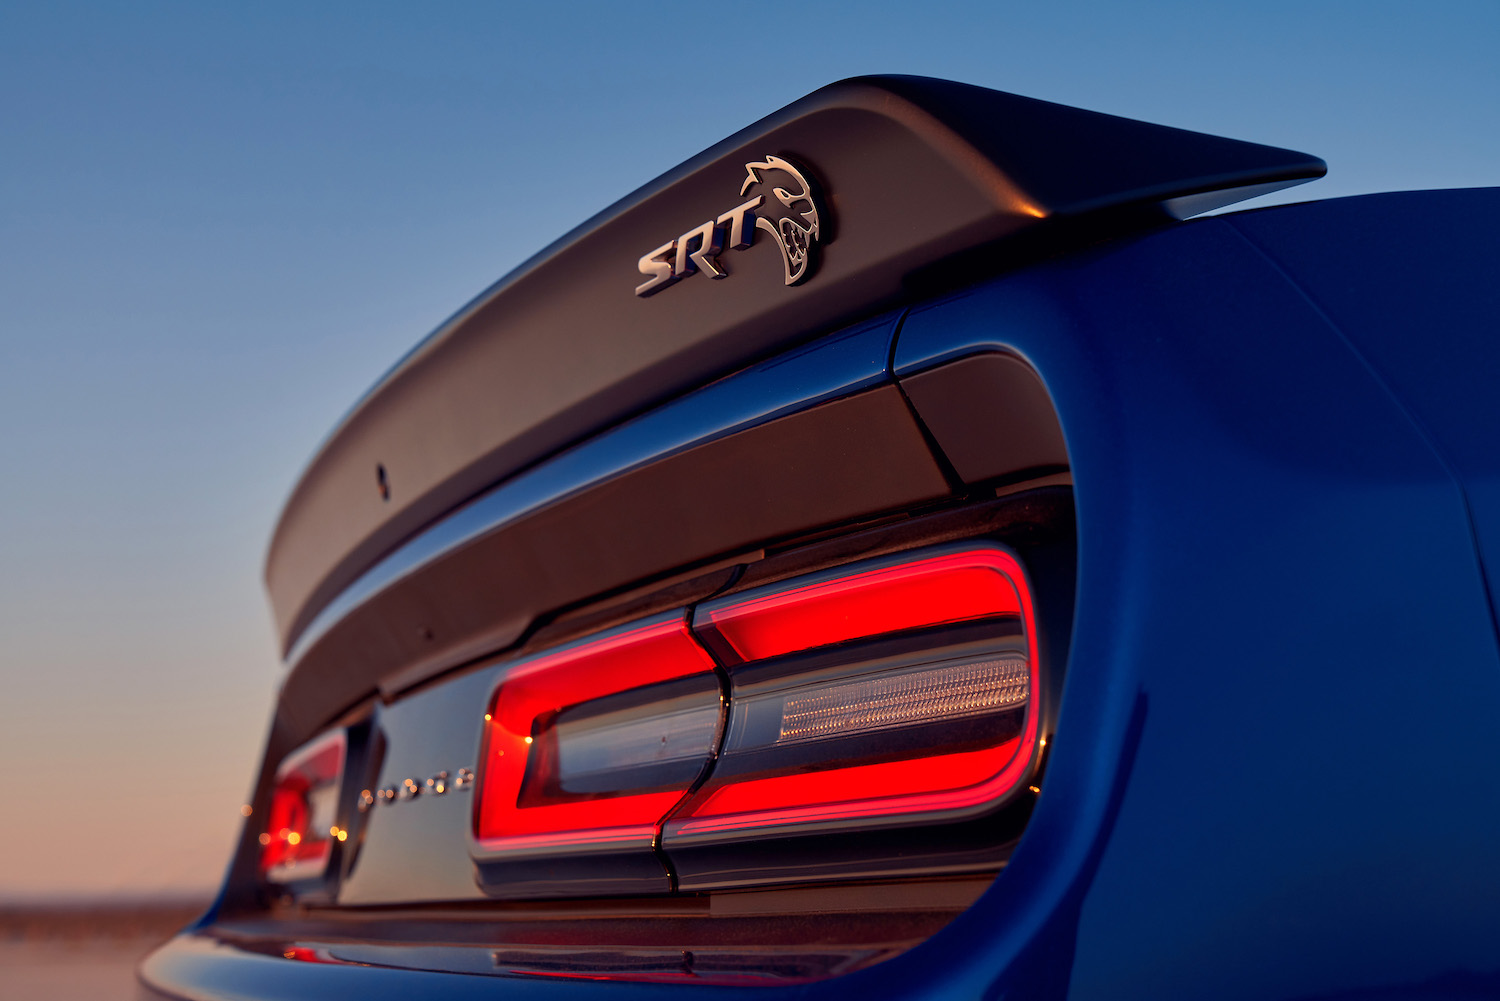 Promo photo of a 2022 Dodge Challenger SRT Hellcat Widebody | Dodge